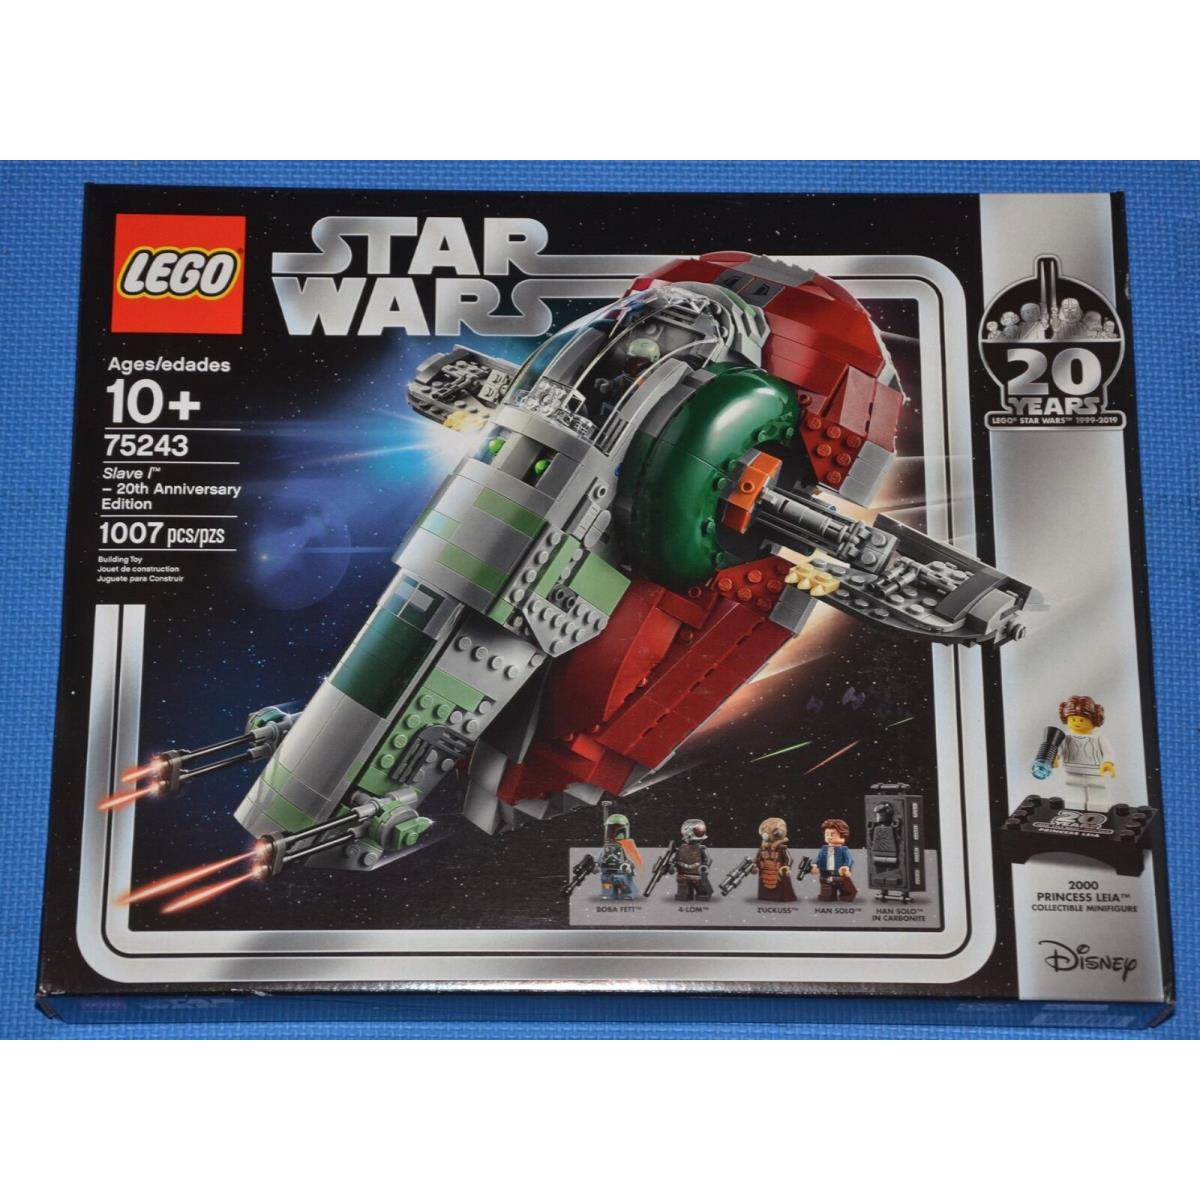 Lego 75243 Star Wars Slave I - 20th Anniversary Edition Set